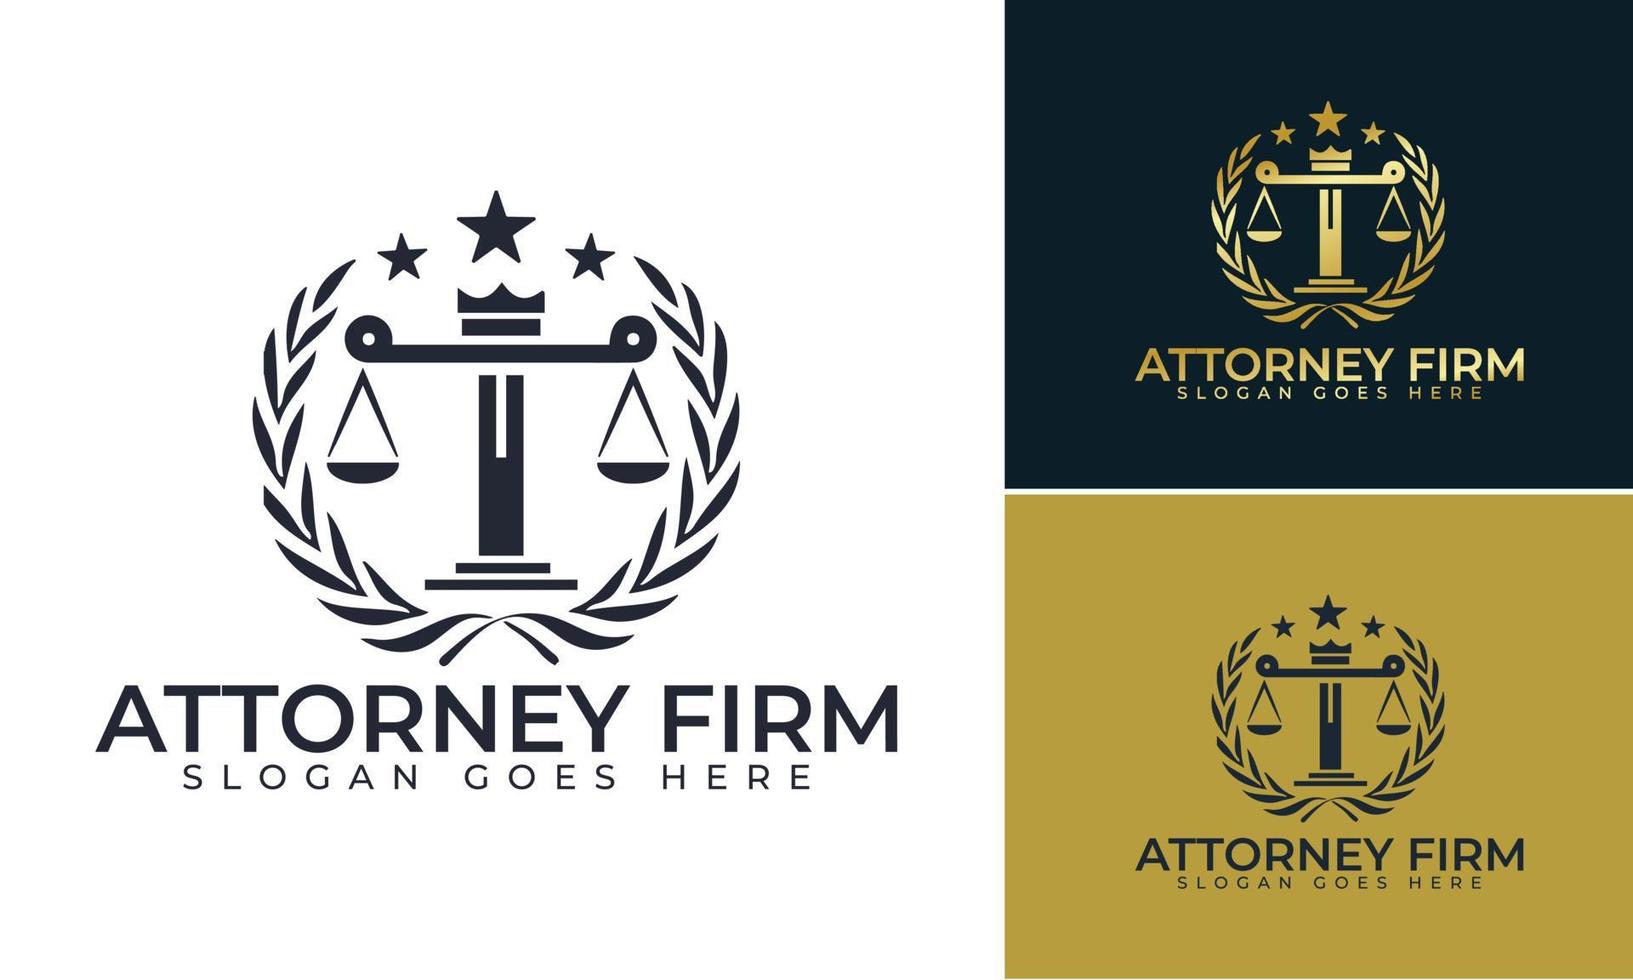 Anwaltskanzlei-Logo-Design, Anwaltslogo-Vektorvorlage vektor